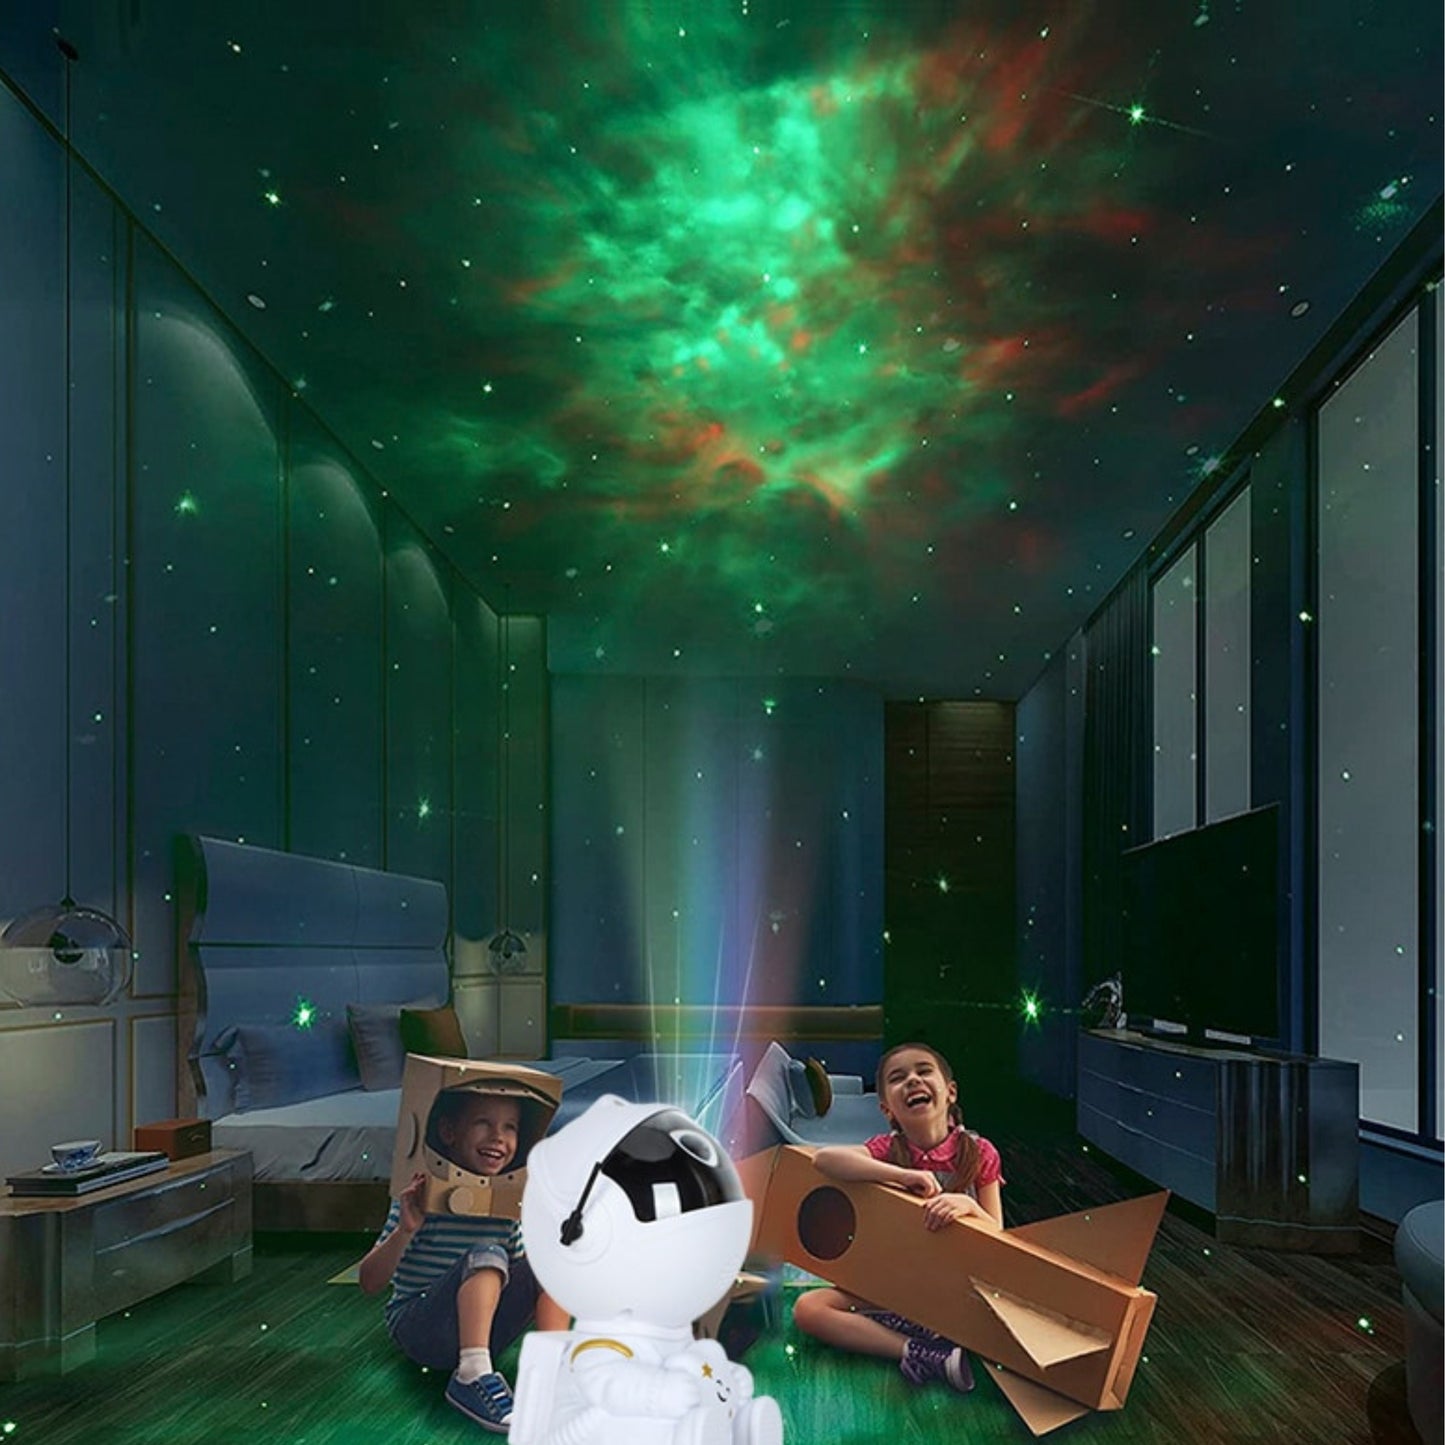 Sitting Astronaut Galaxy Projector